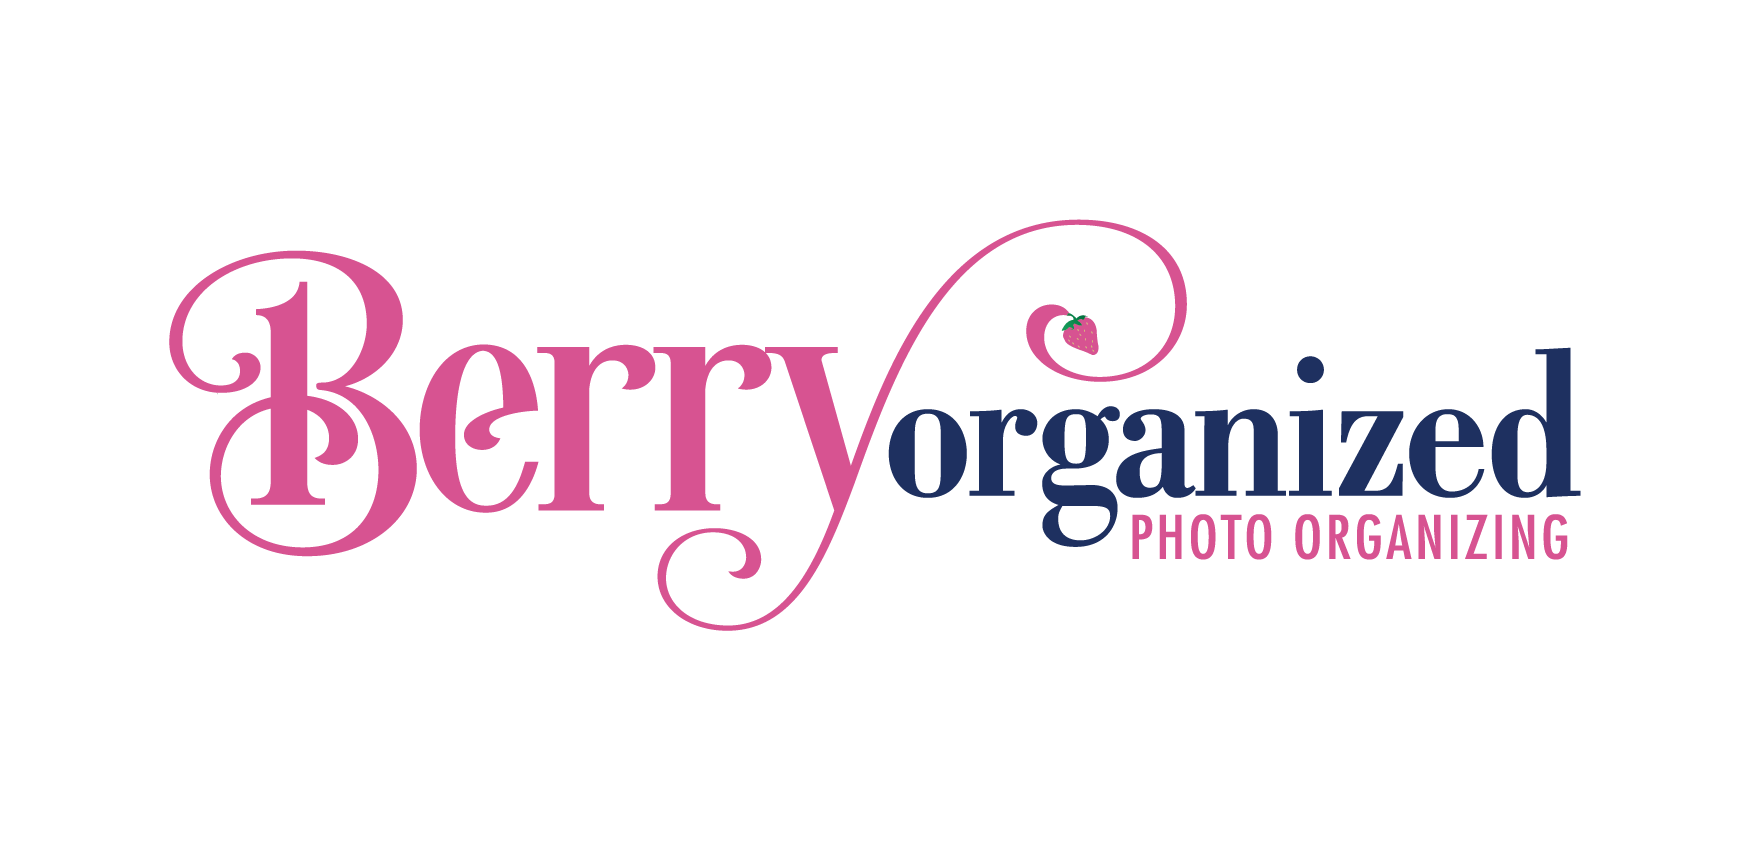 Berry_logo_final-01-300 dpi.png